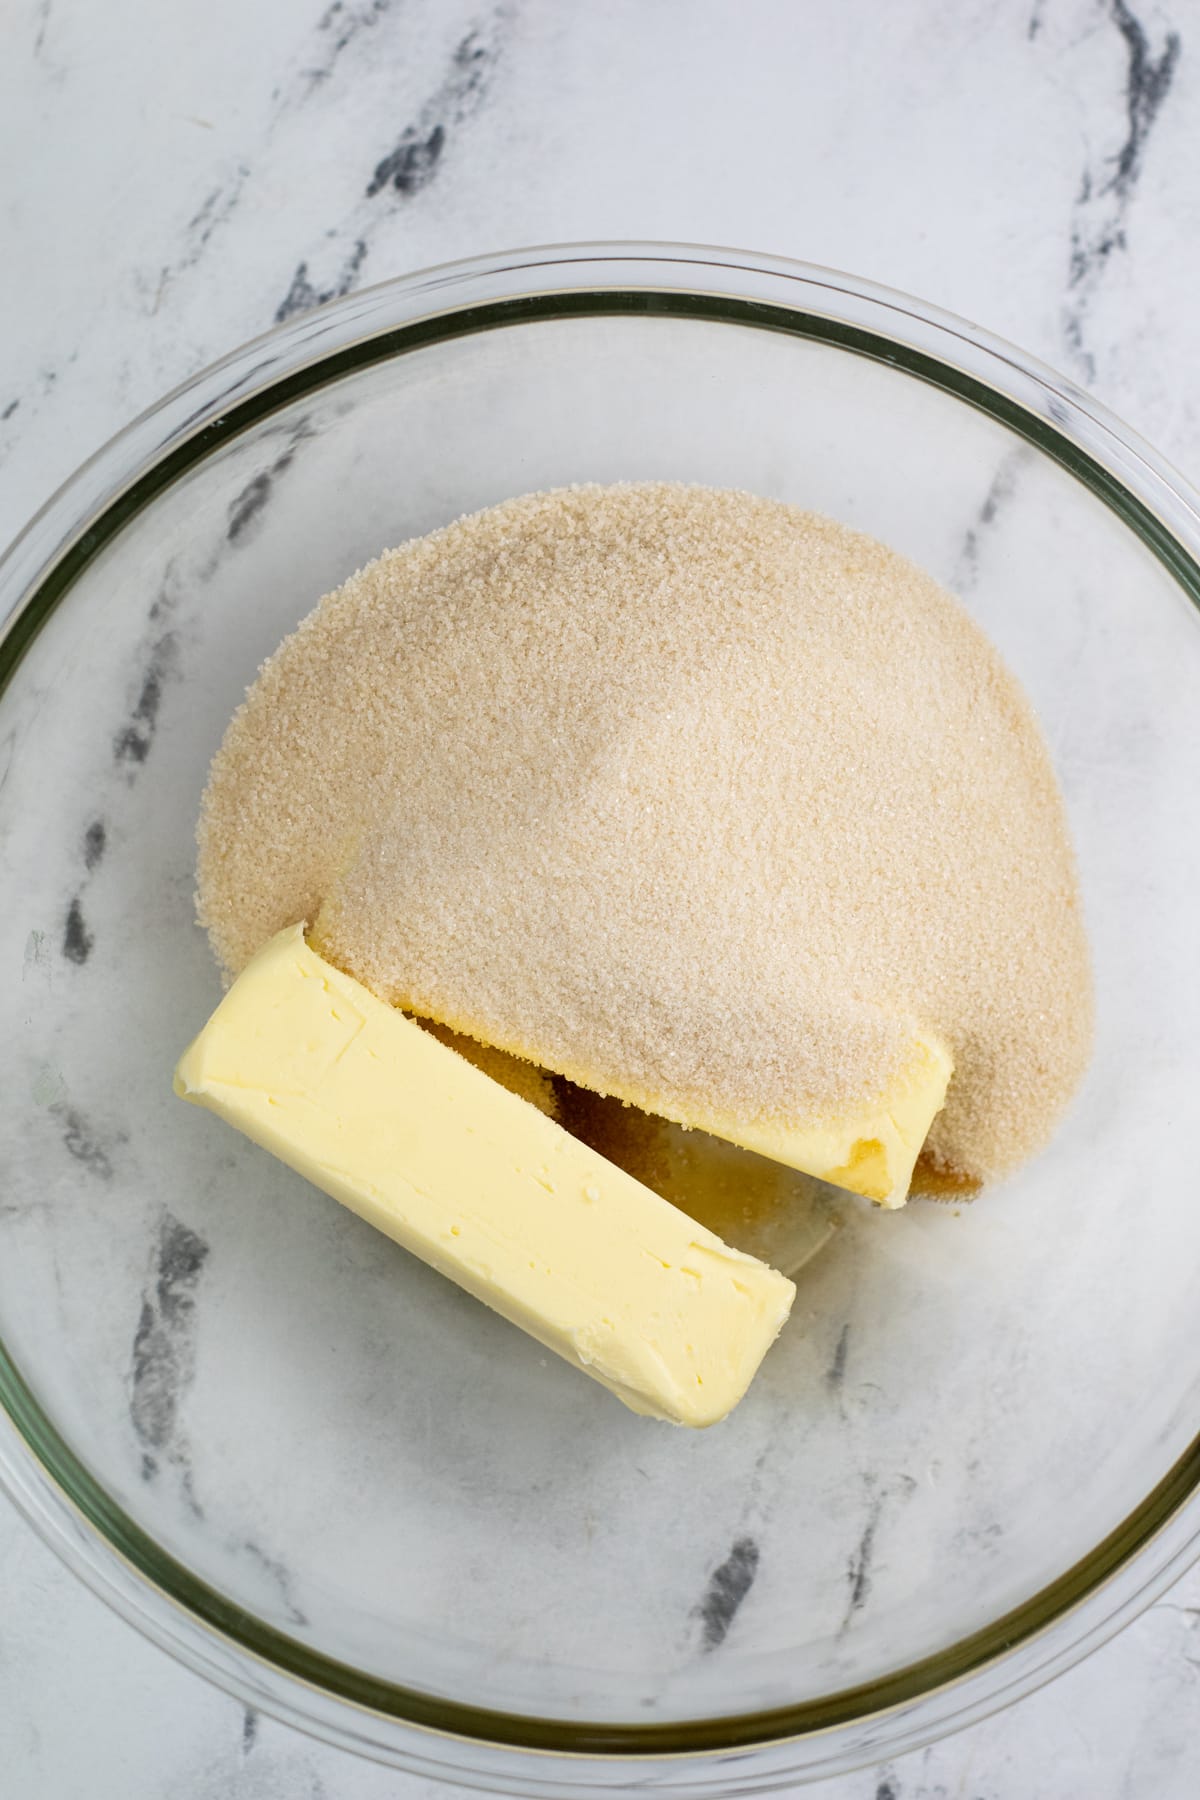 Next step in preparing Cranberry Orange Pound Cake is to add butter cream and sugar.